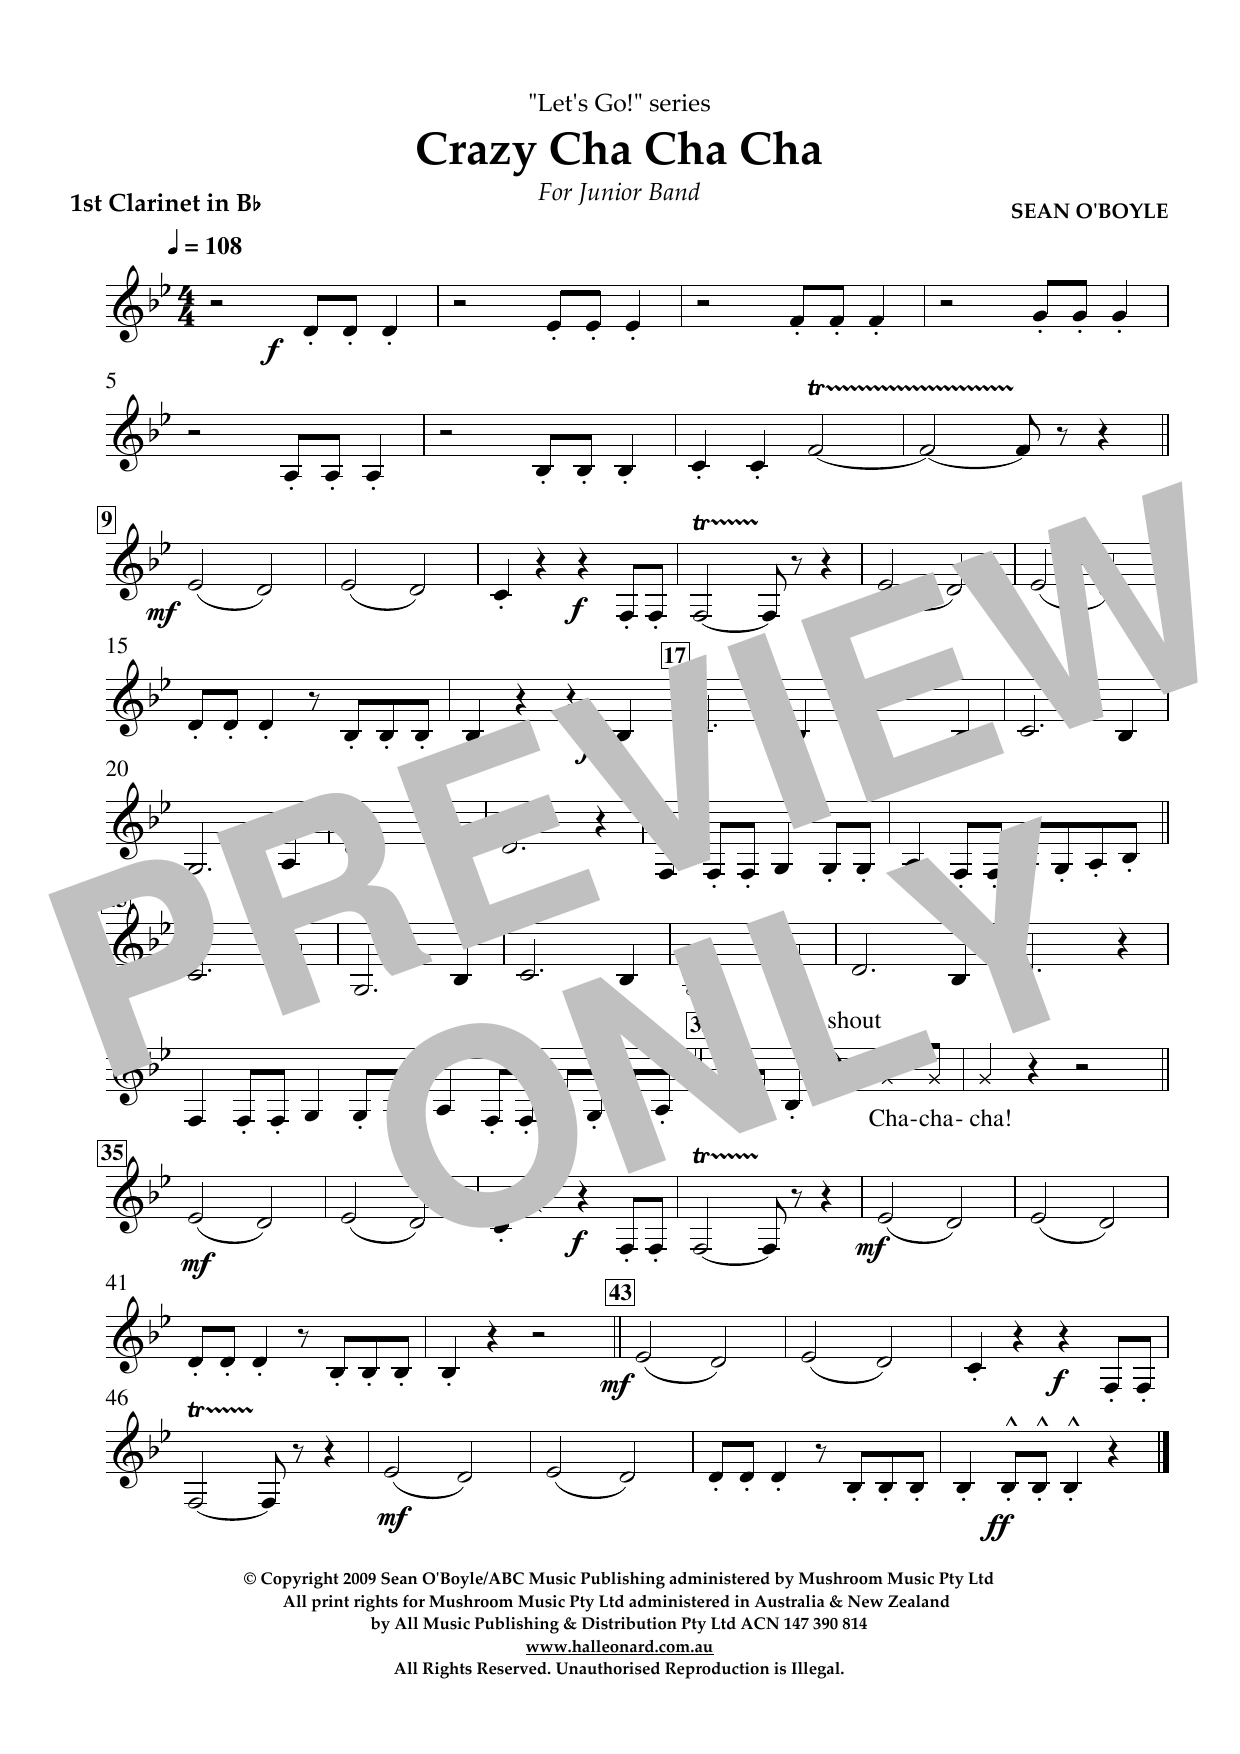 Sean O'Boyle Crazy Cha Cha Cha - Bb Clarinet 1 Sheet Music Notes & Chords for Concert Band - Download or Print PDF